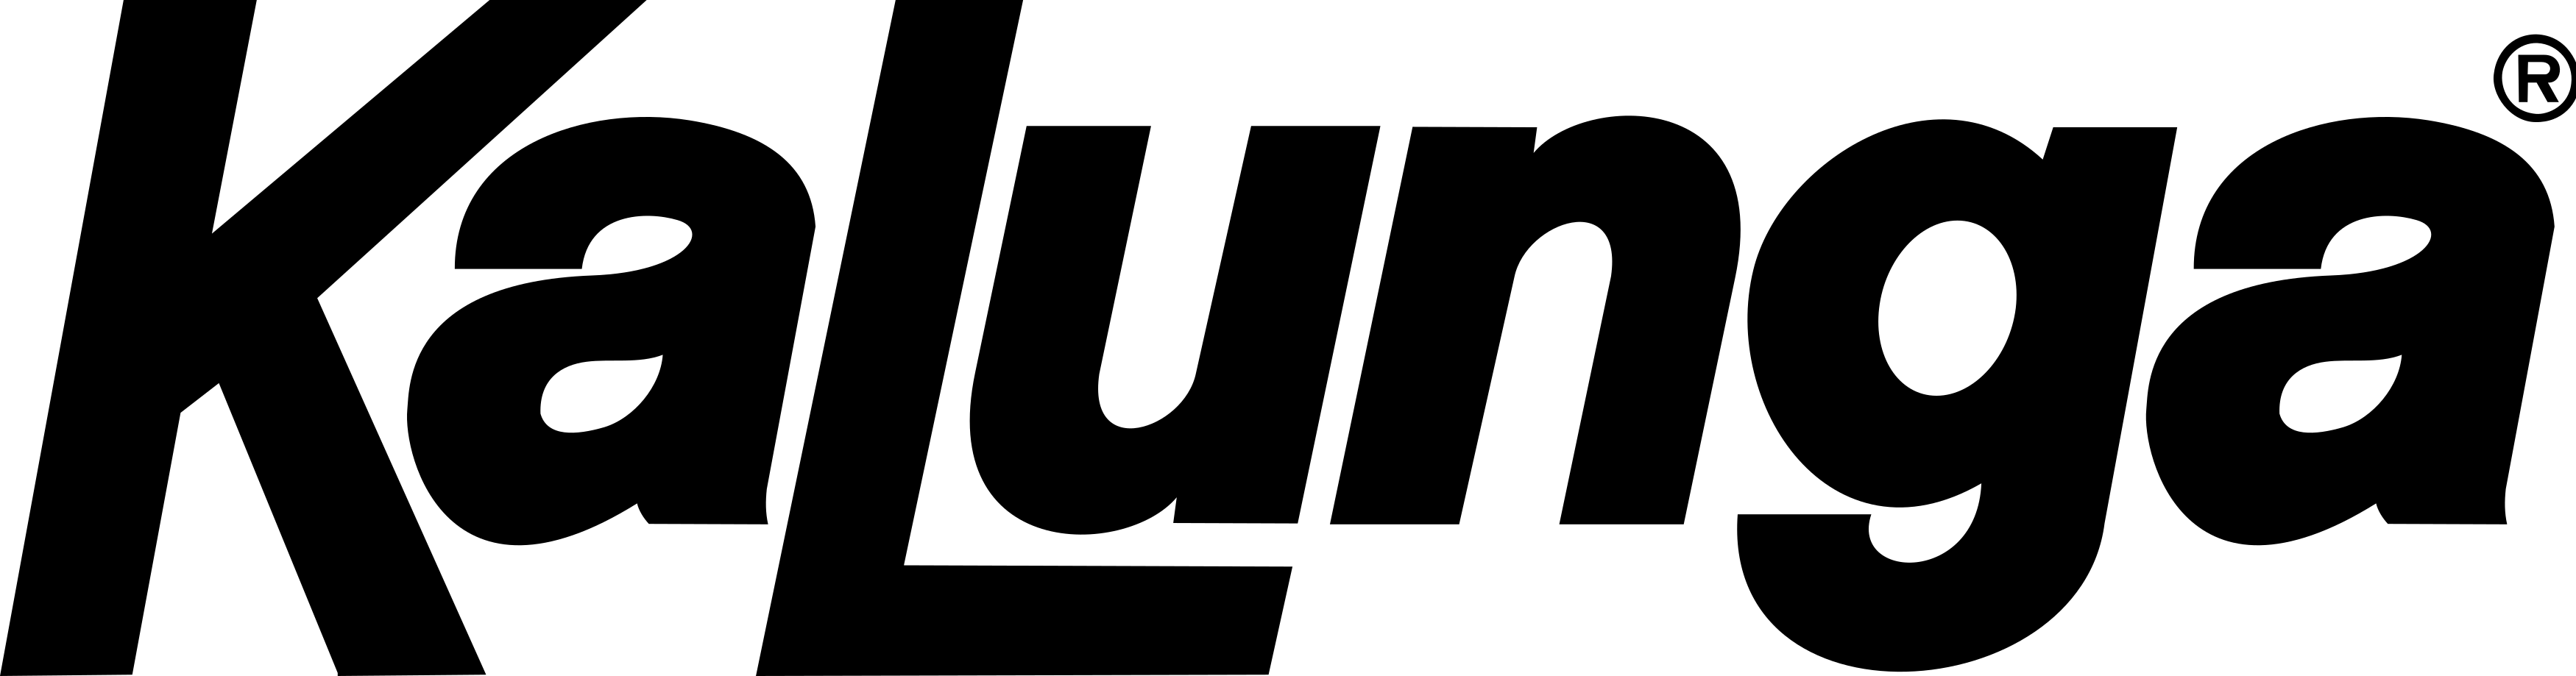 kalunga logo